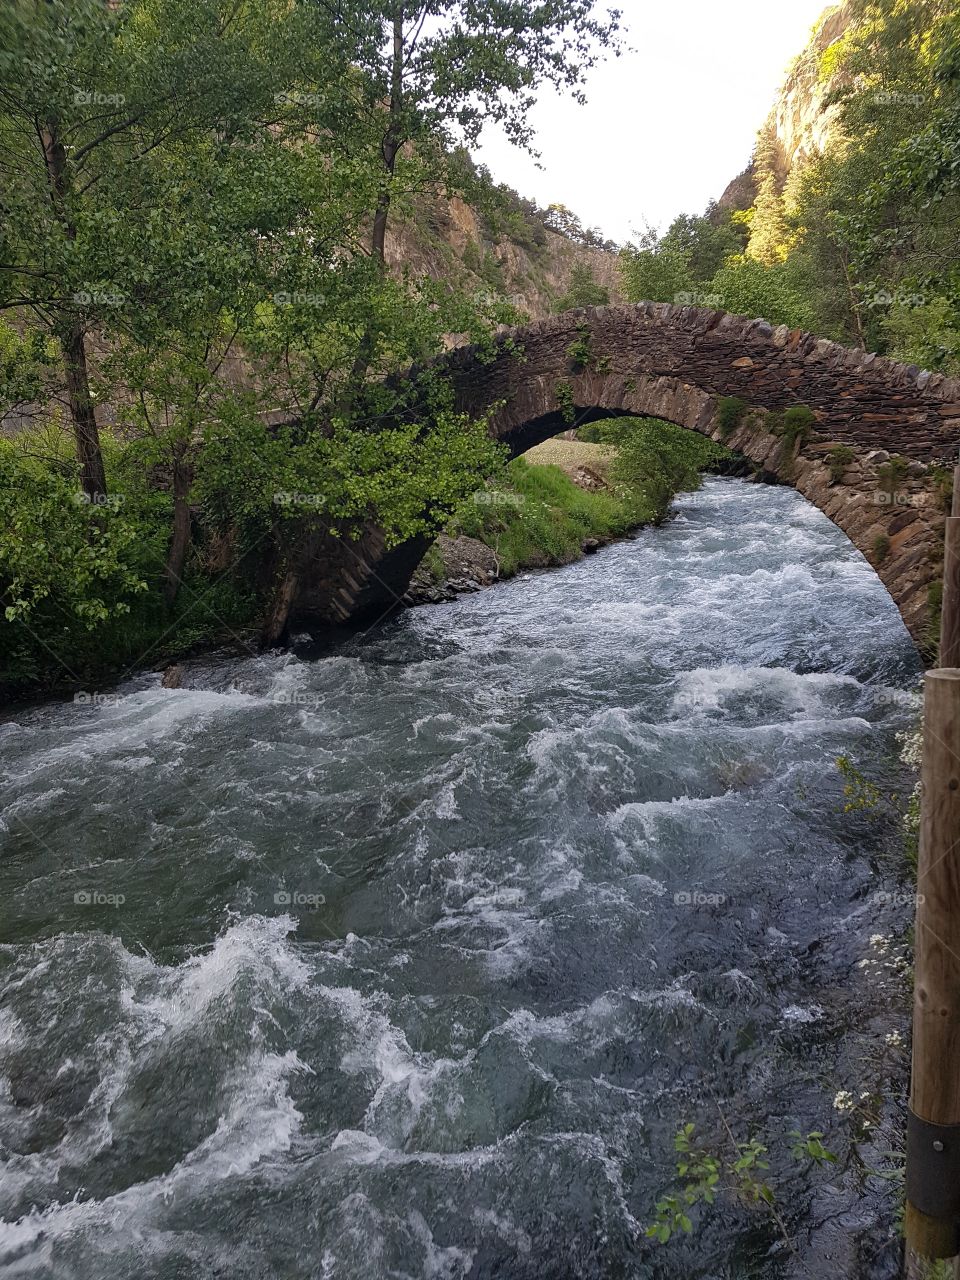 nice stone bridge over a wild river